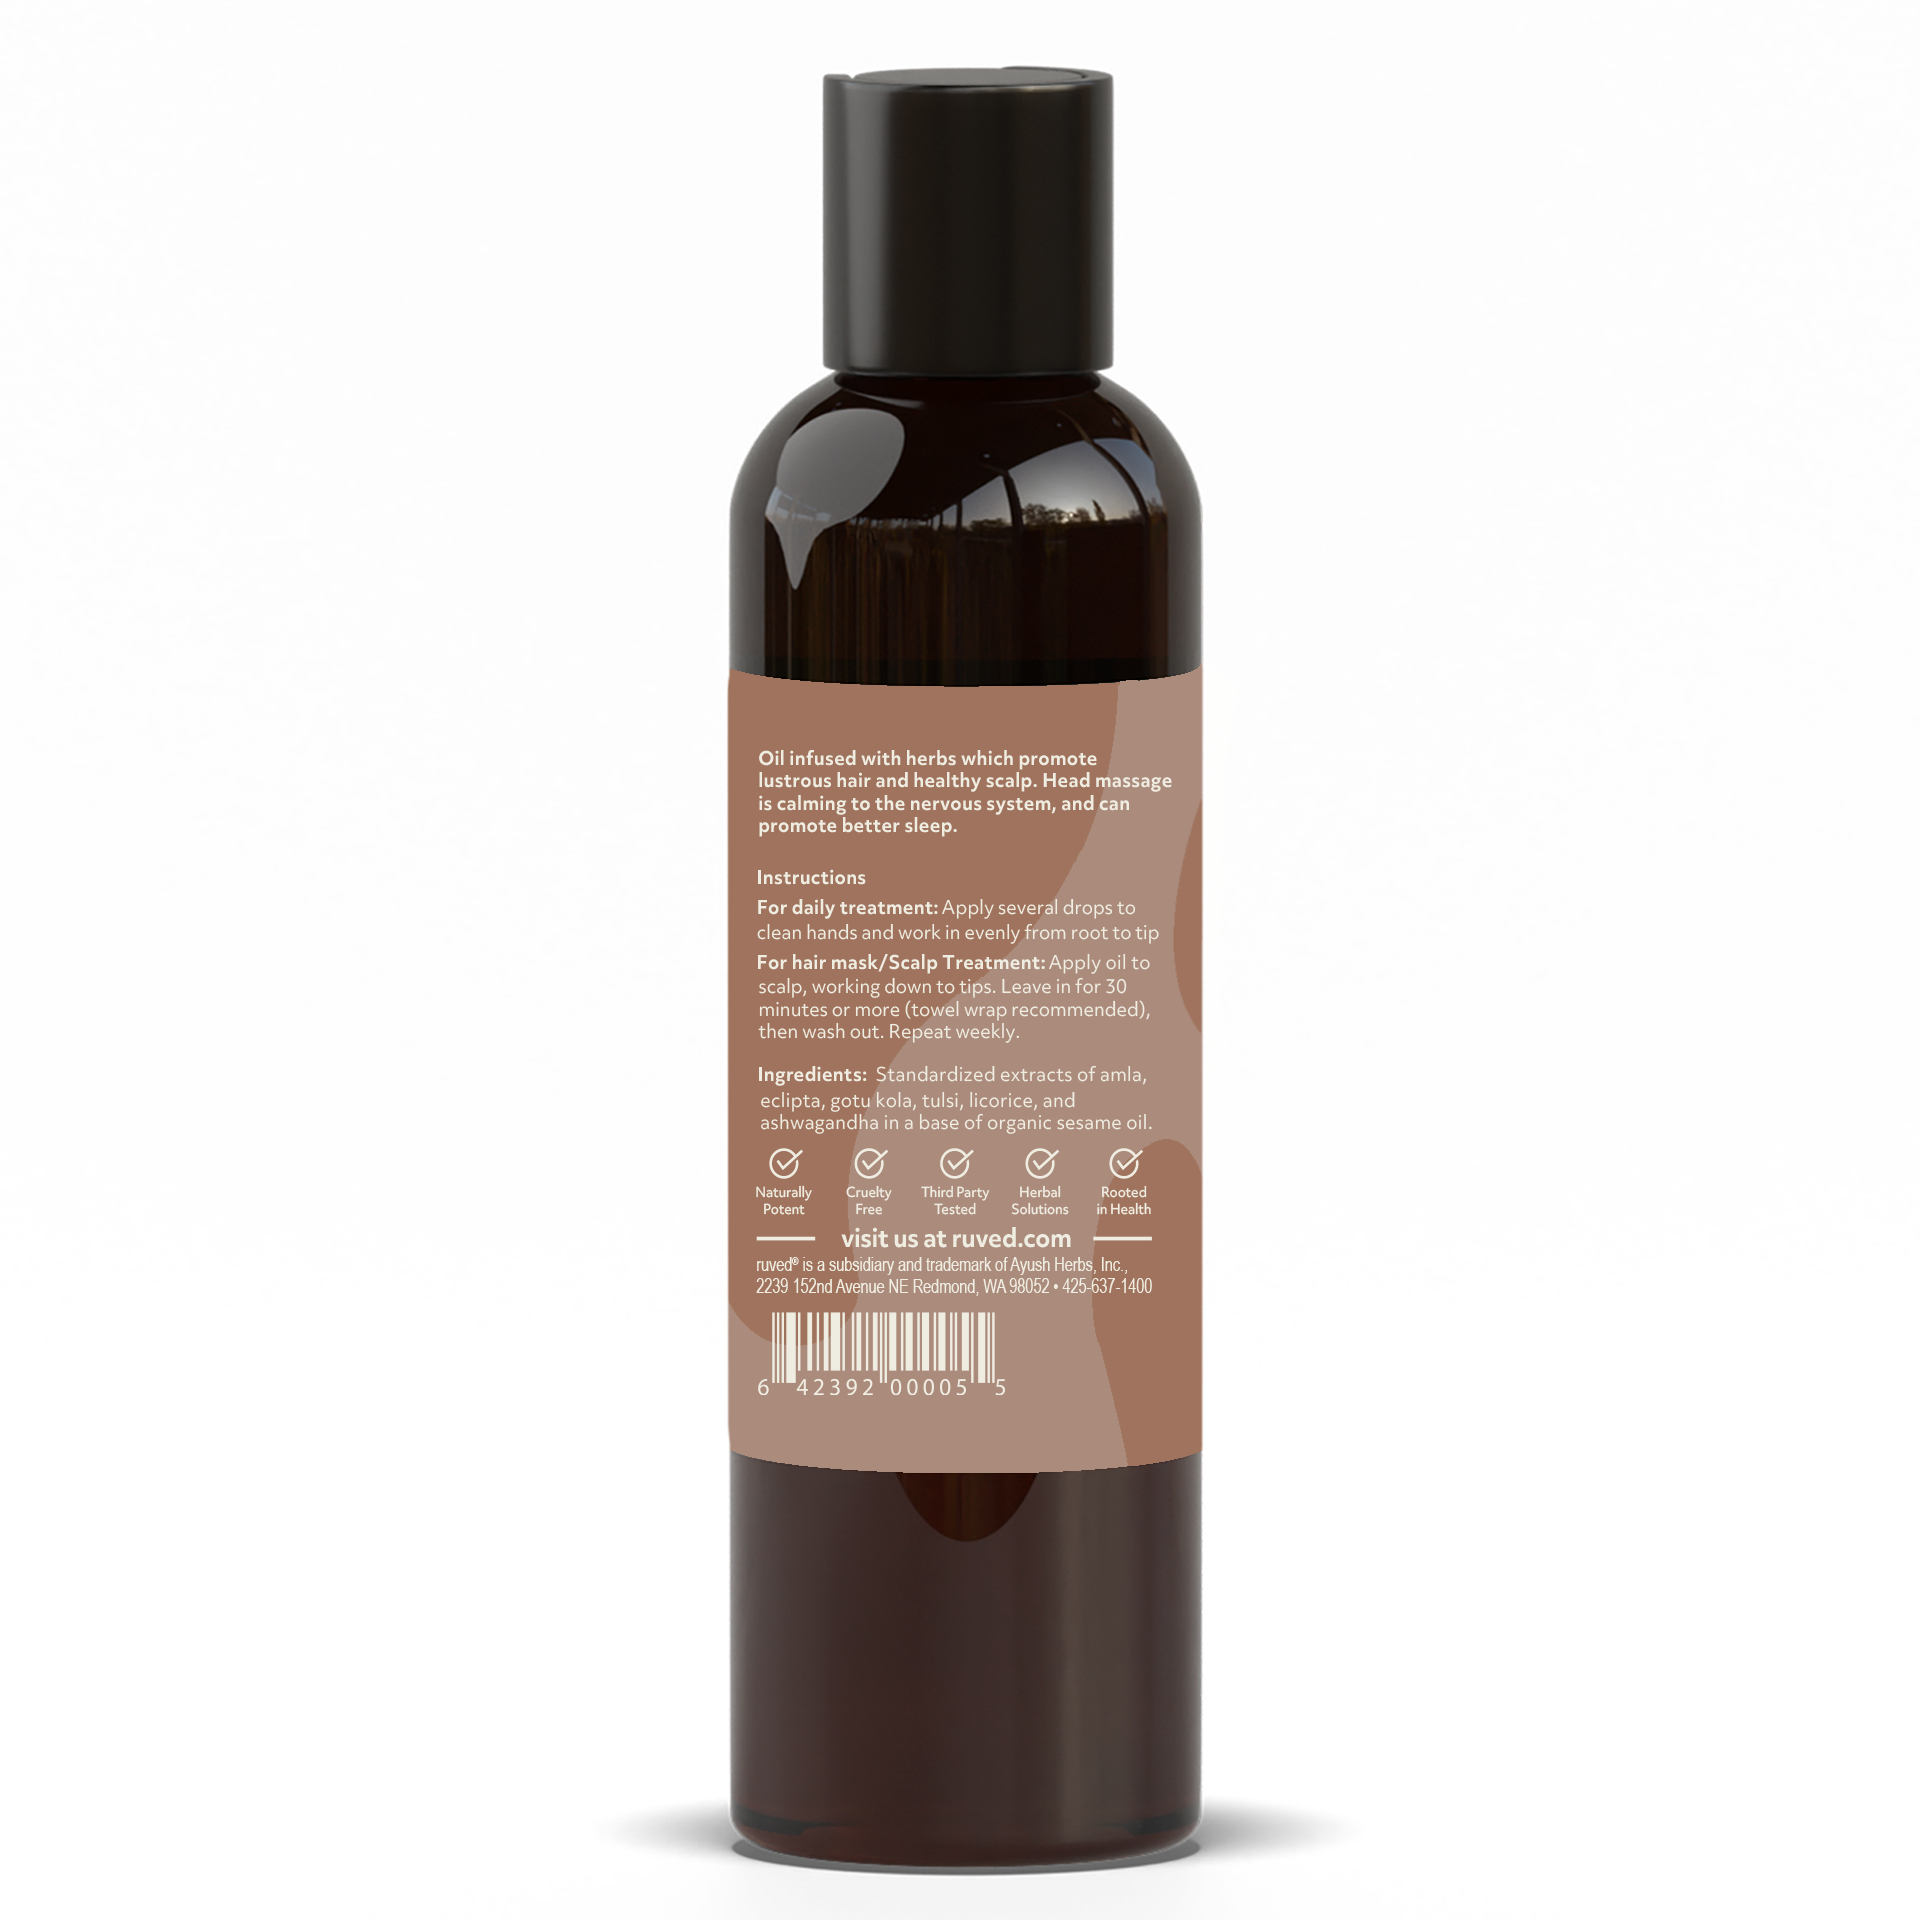 Rejuvenating Hair Oil Supplement Facts Back Side - Luxurious blend of natural oils to Enhance Scalp Skin Health, promoting Hair Health. 100ml Bottle.